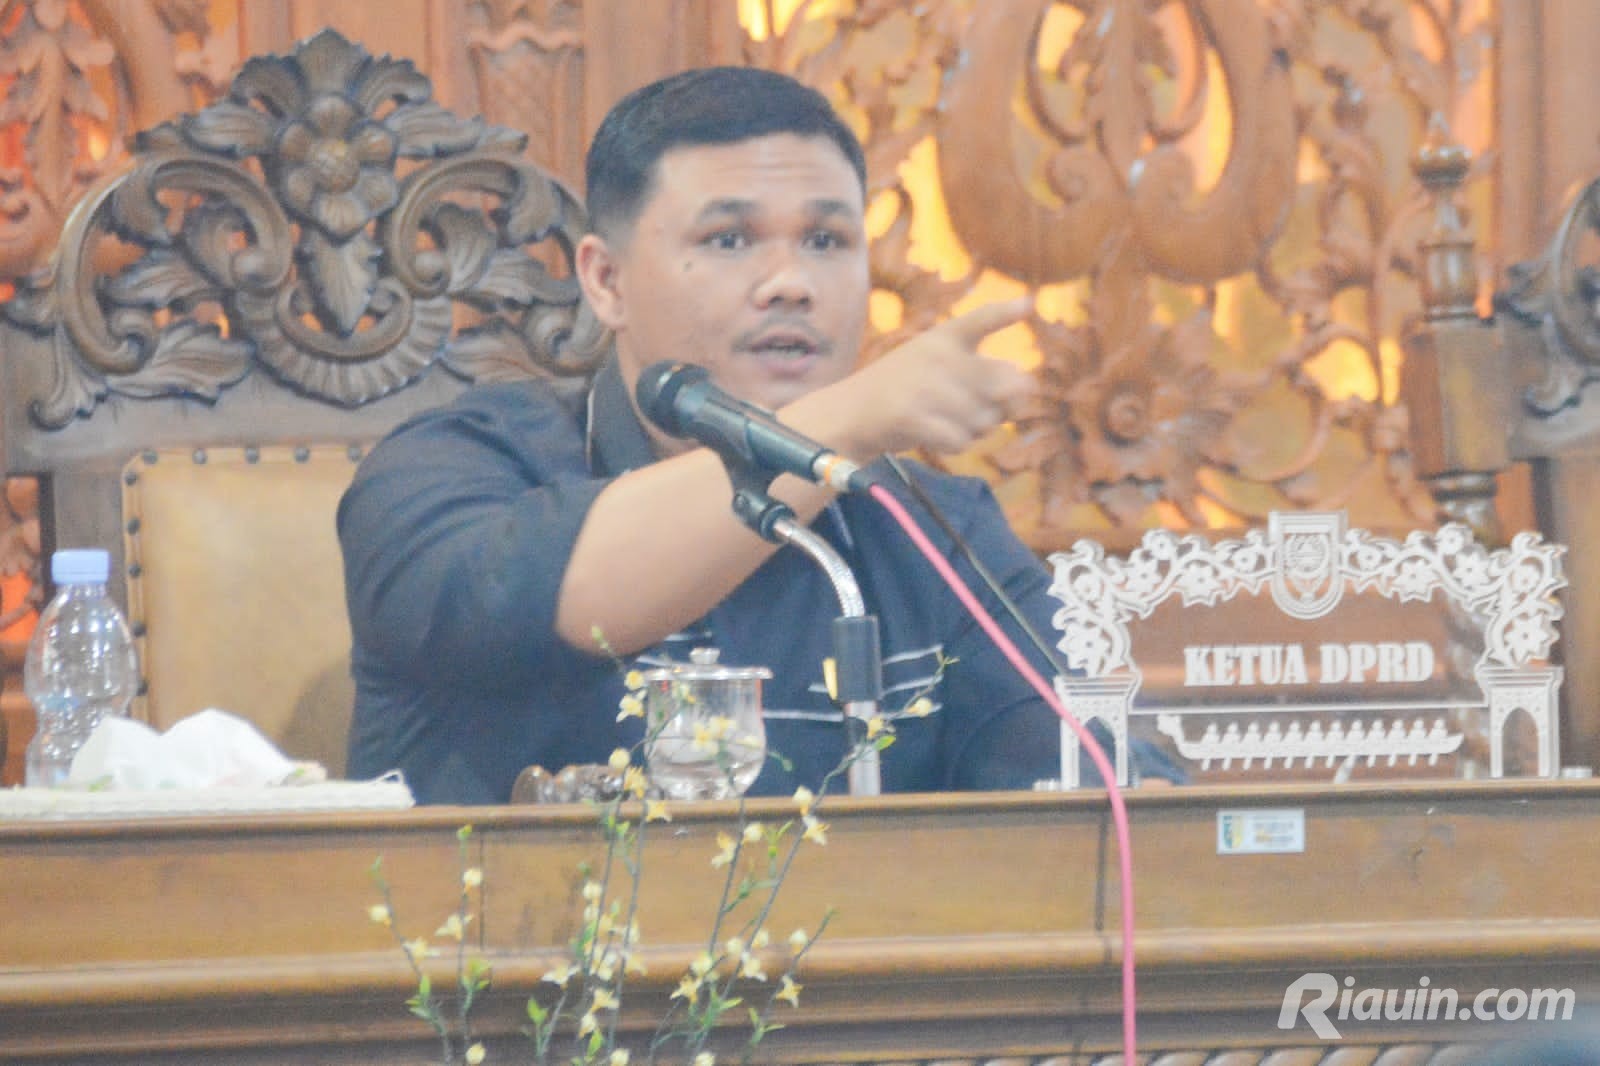 4 Bulan Tak Terima Hak, Ketua DPRD Desak Pemkab Bayarkan Hak ASN-Perangkat Desa dan BPD se-Kuansing